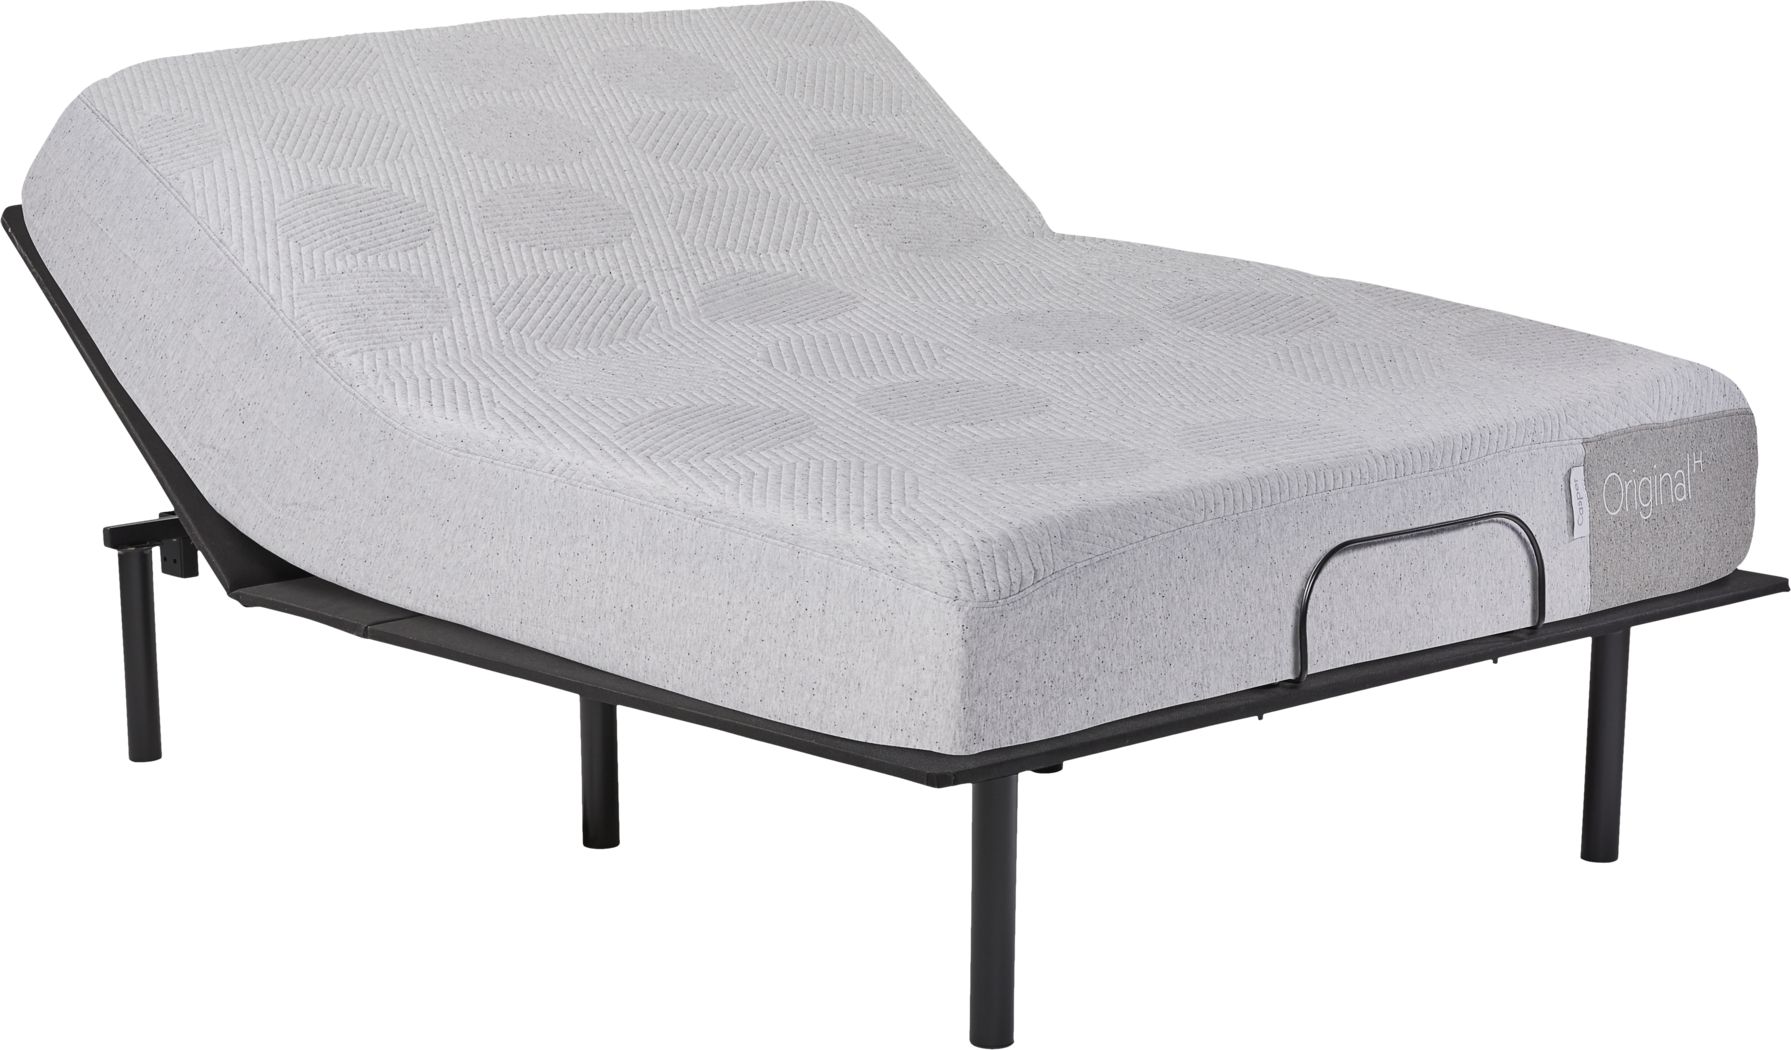 casper queen mattress adjustable